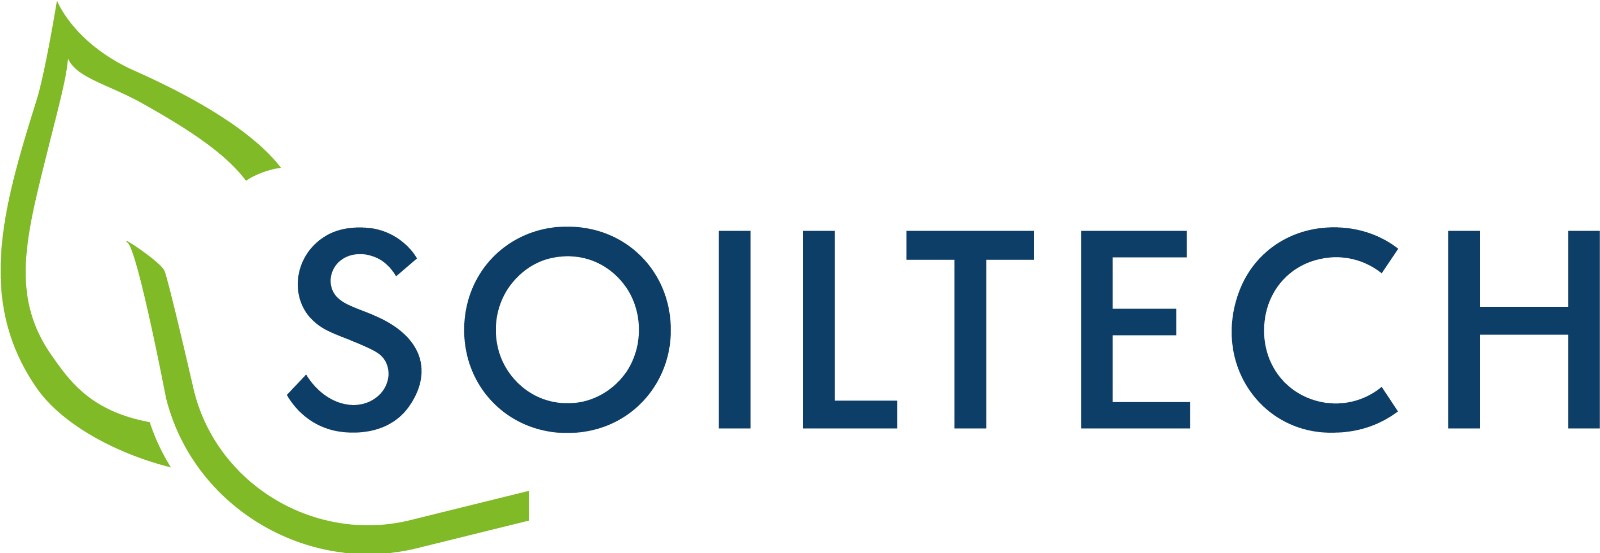 Soiltech logo